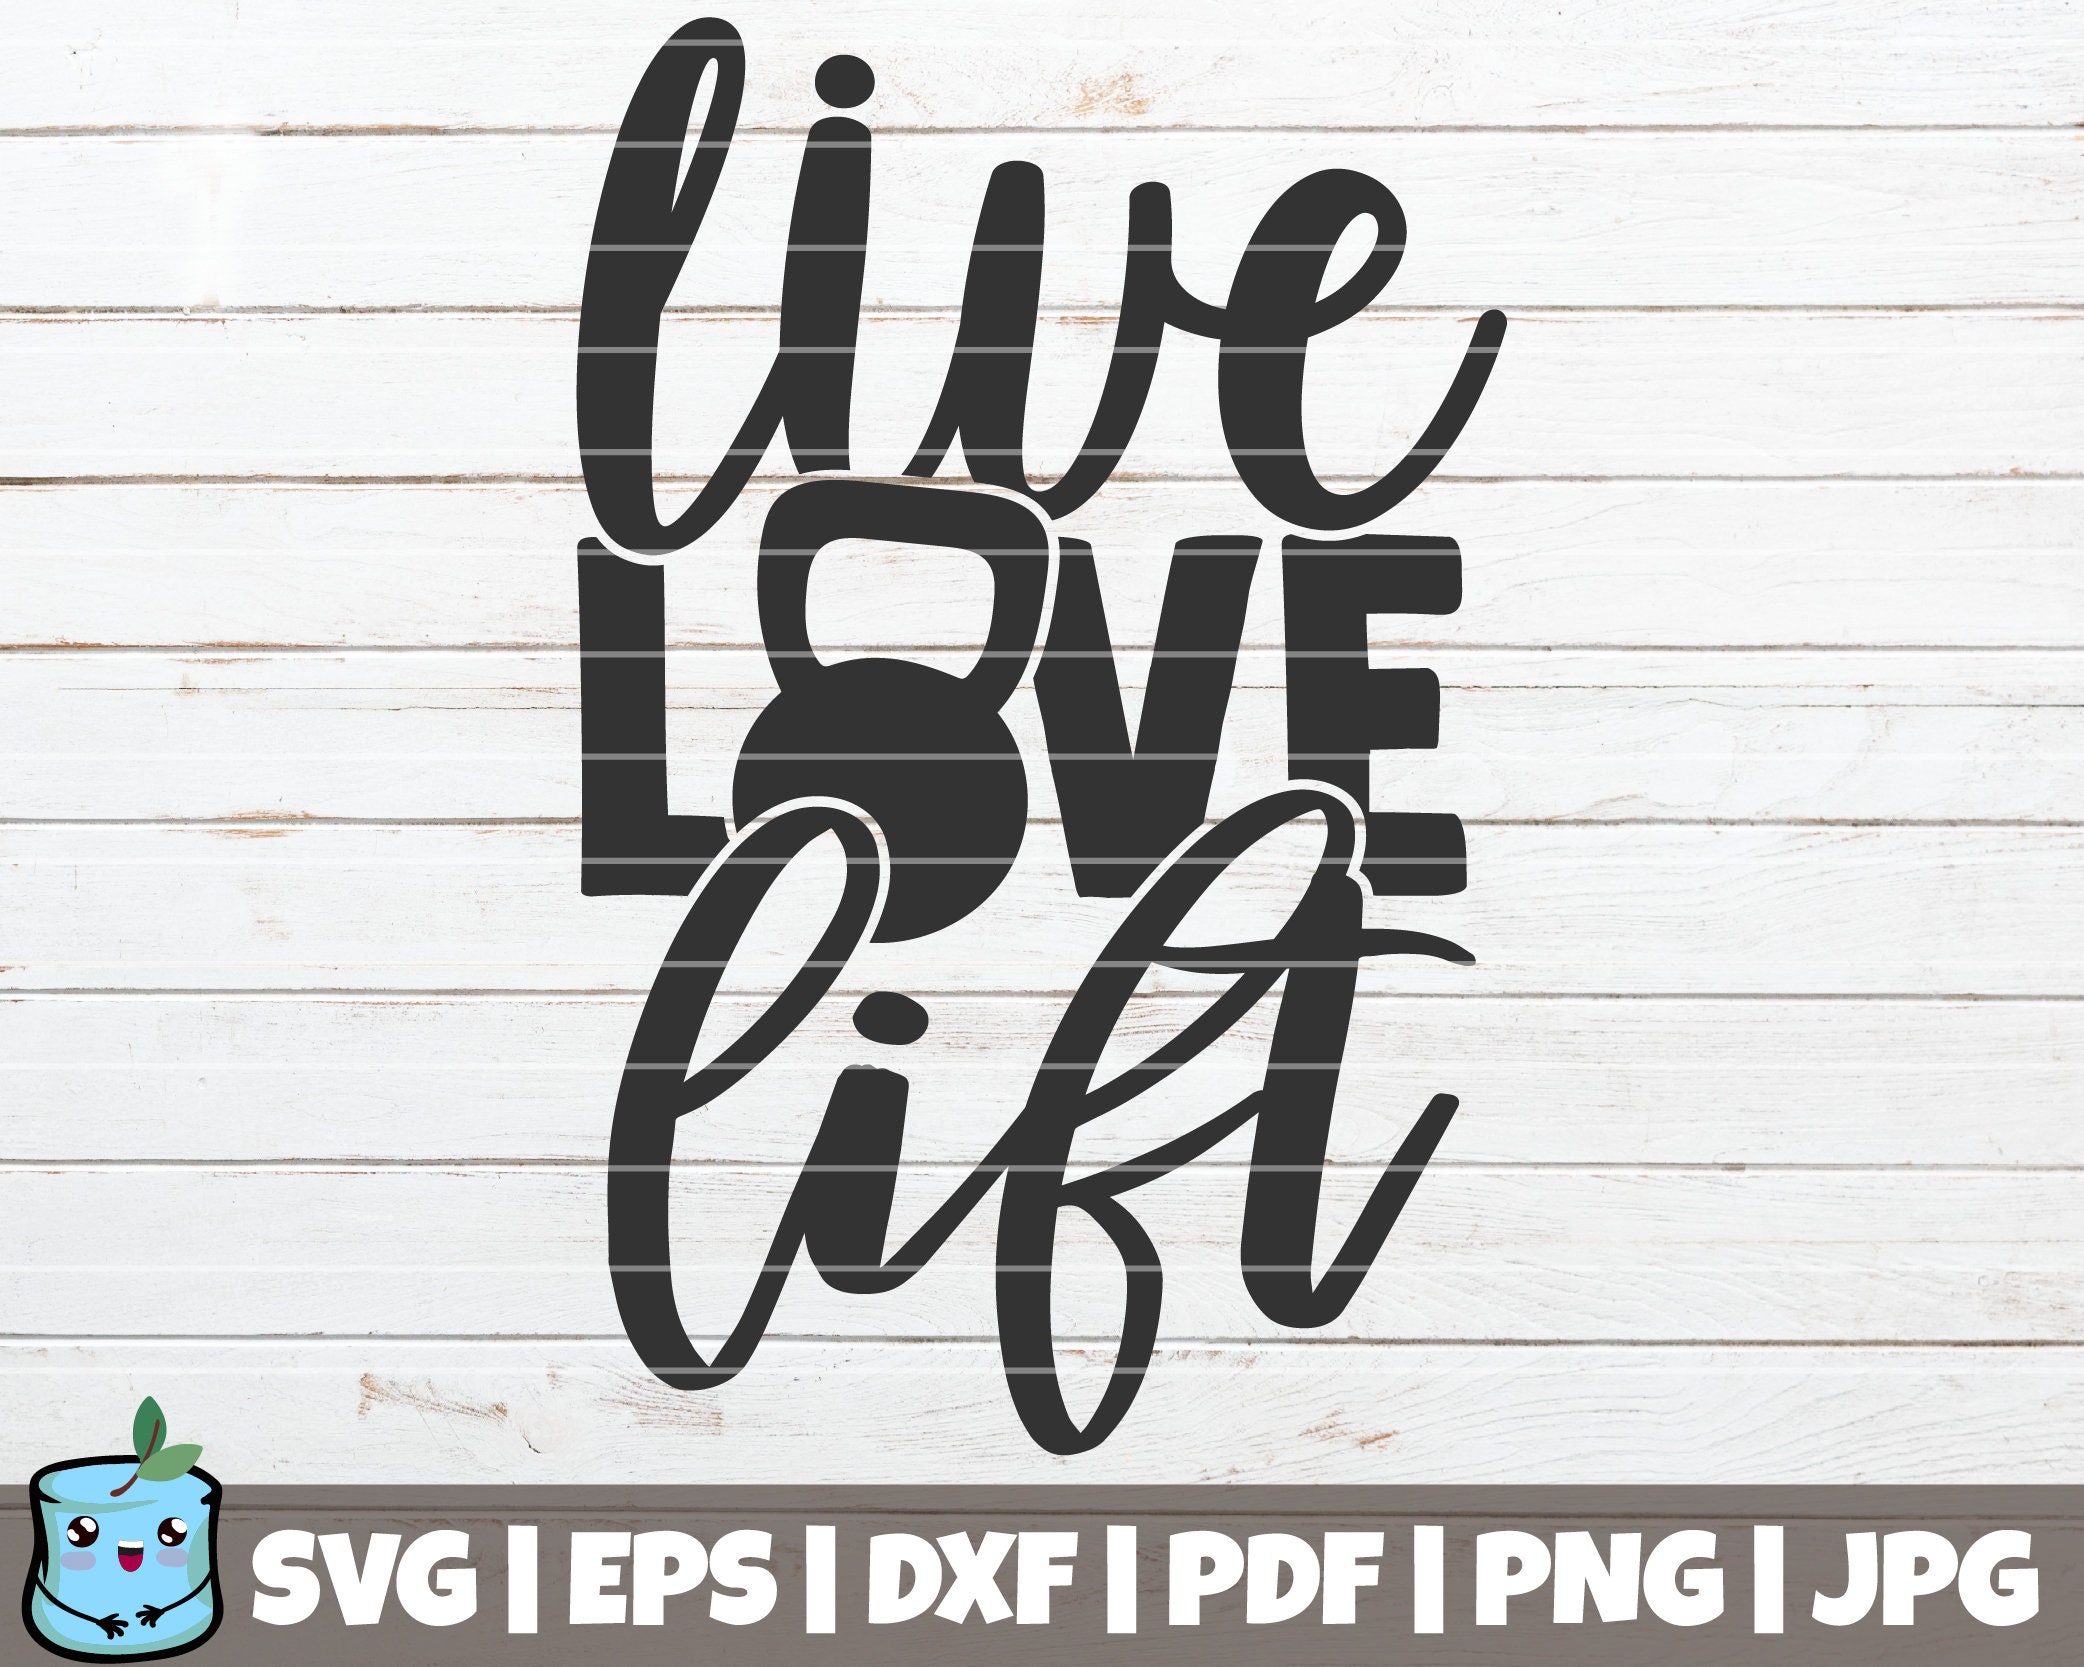 Love SVG, Love Script HeartSvg, Dxf, Png, Love DXF, Cut File - Inspire  Uplift